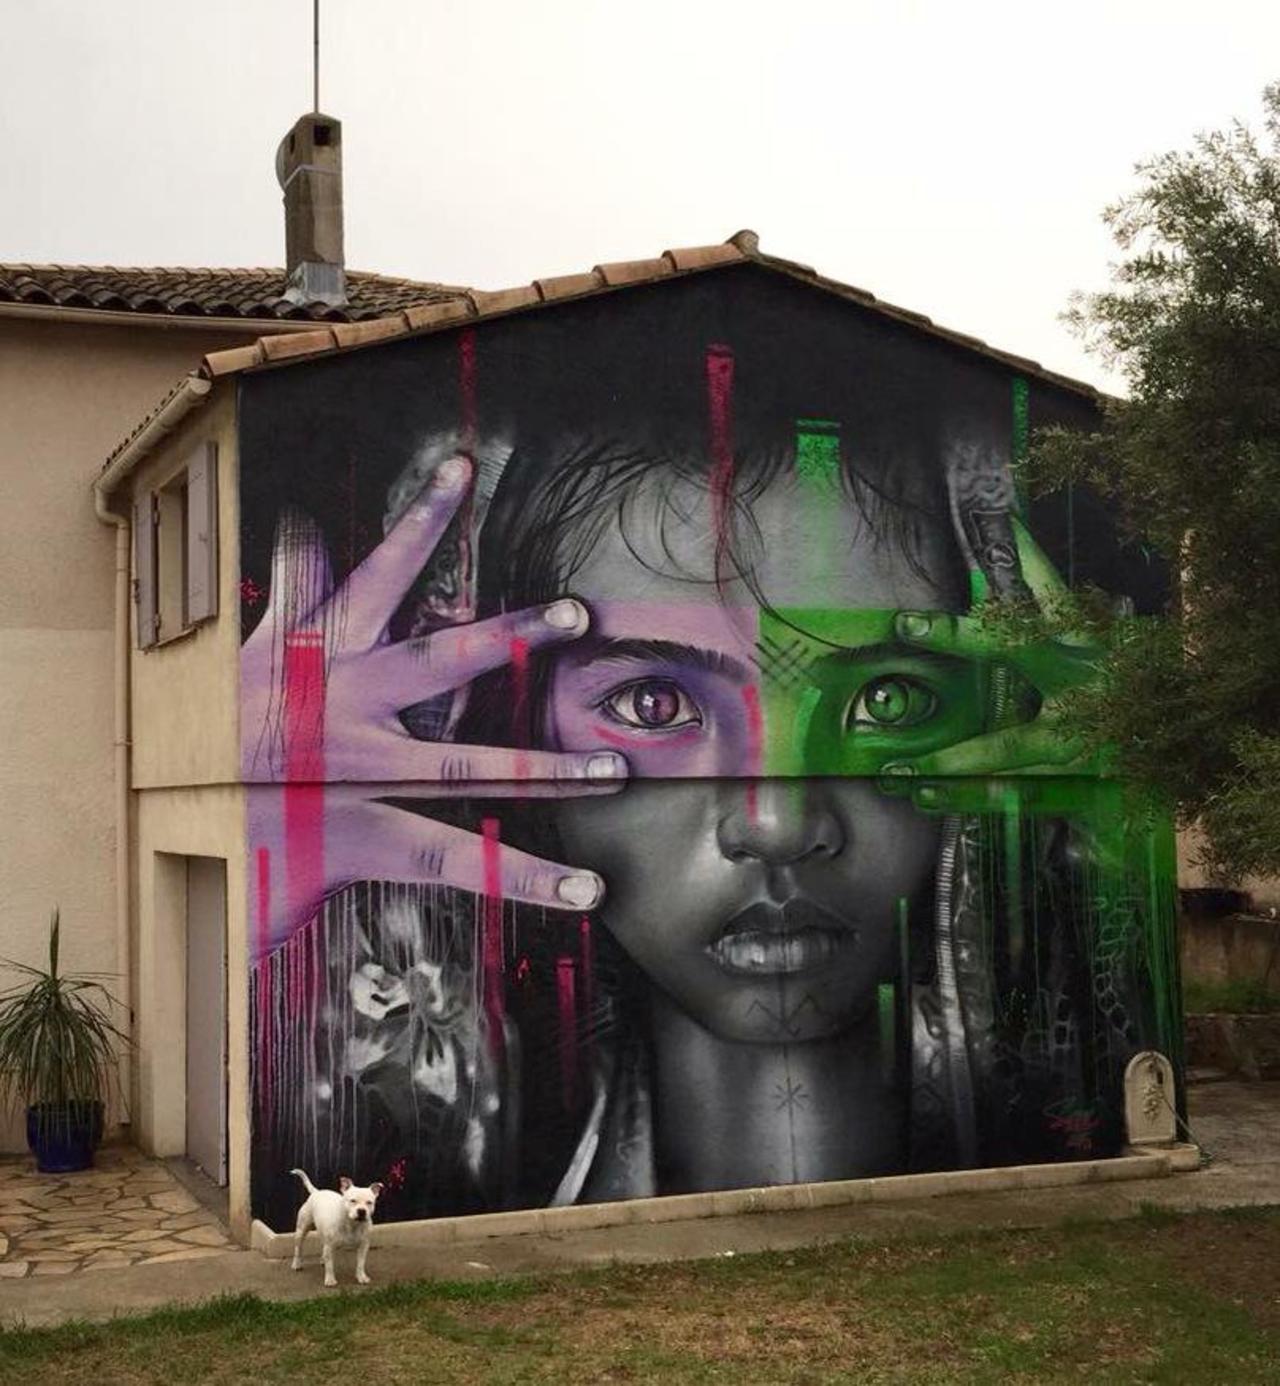 'Open your mind'
Street Art by Guillaume Dusotoit 

#art #arte #graffiti #streetart http://t.co/UXueIg8rhG